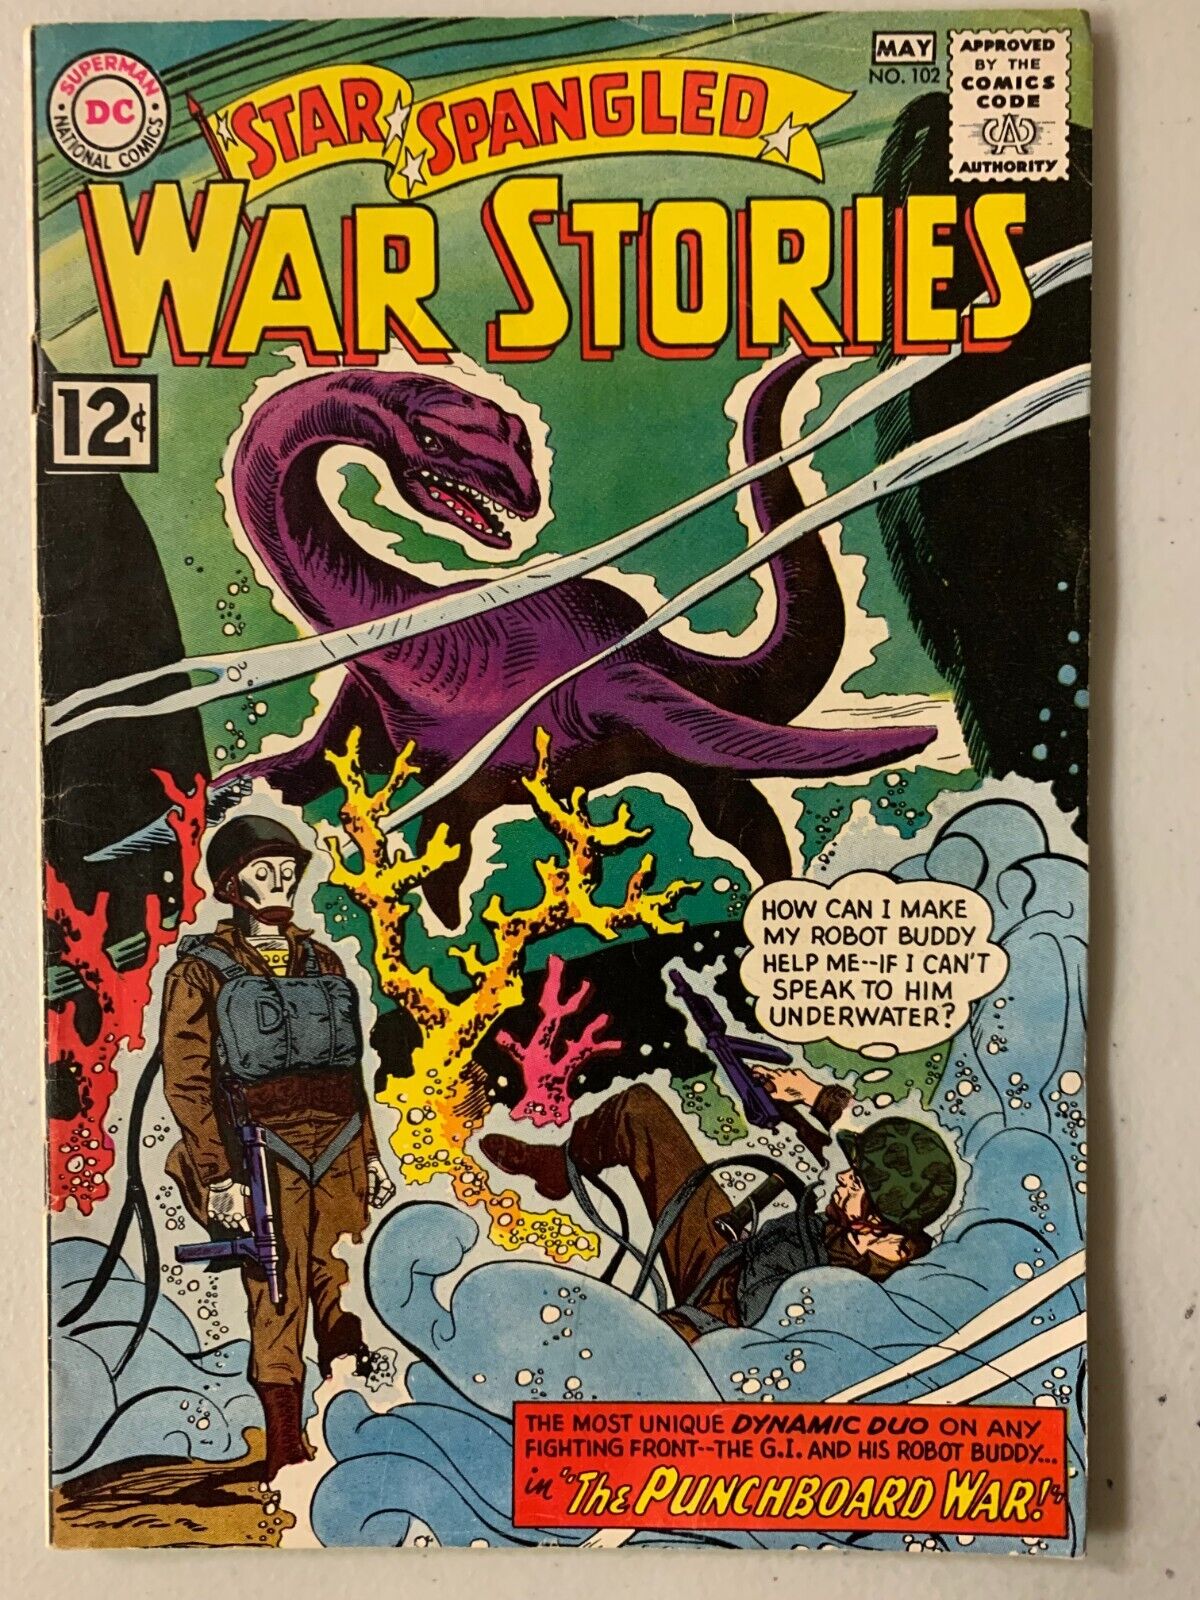 Star Spangled War Stories #1-2 all dinosaur issue 4.0 (1962)